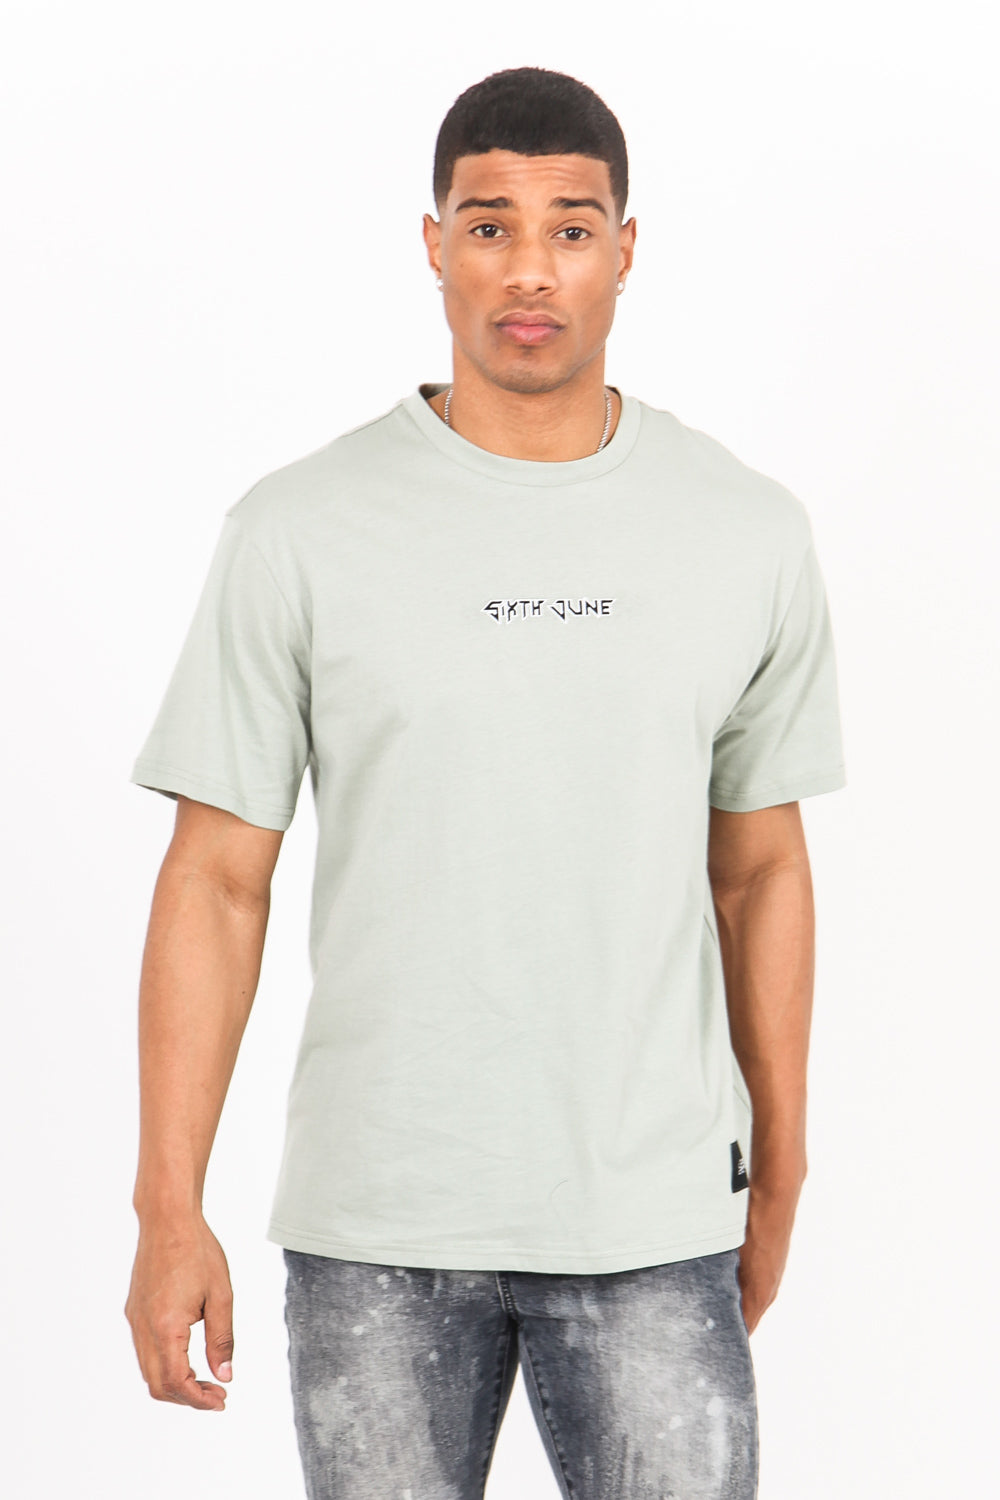 Sixth June - T-shirt "bad reputation" hard rock vert